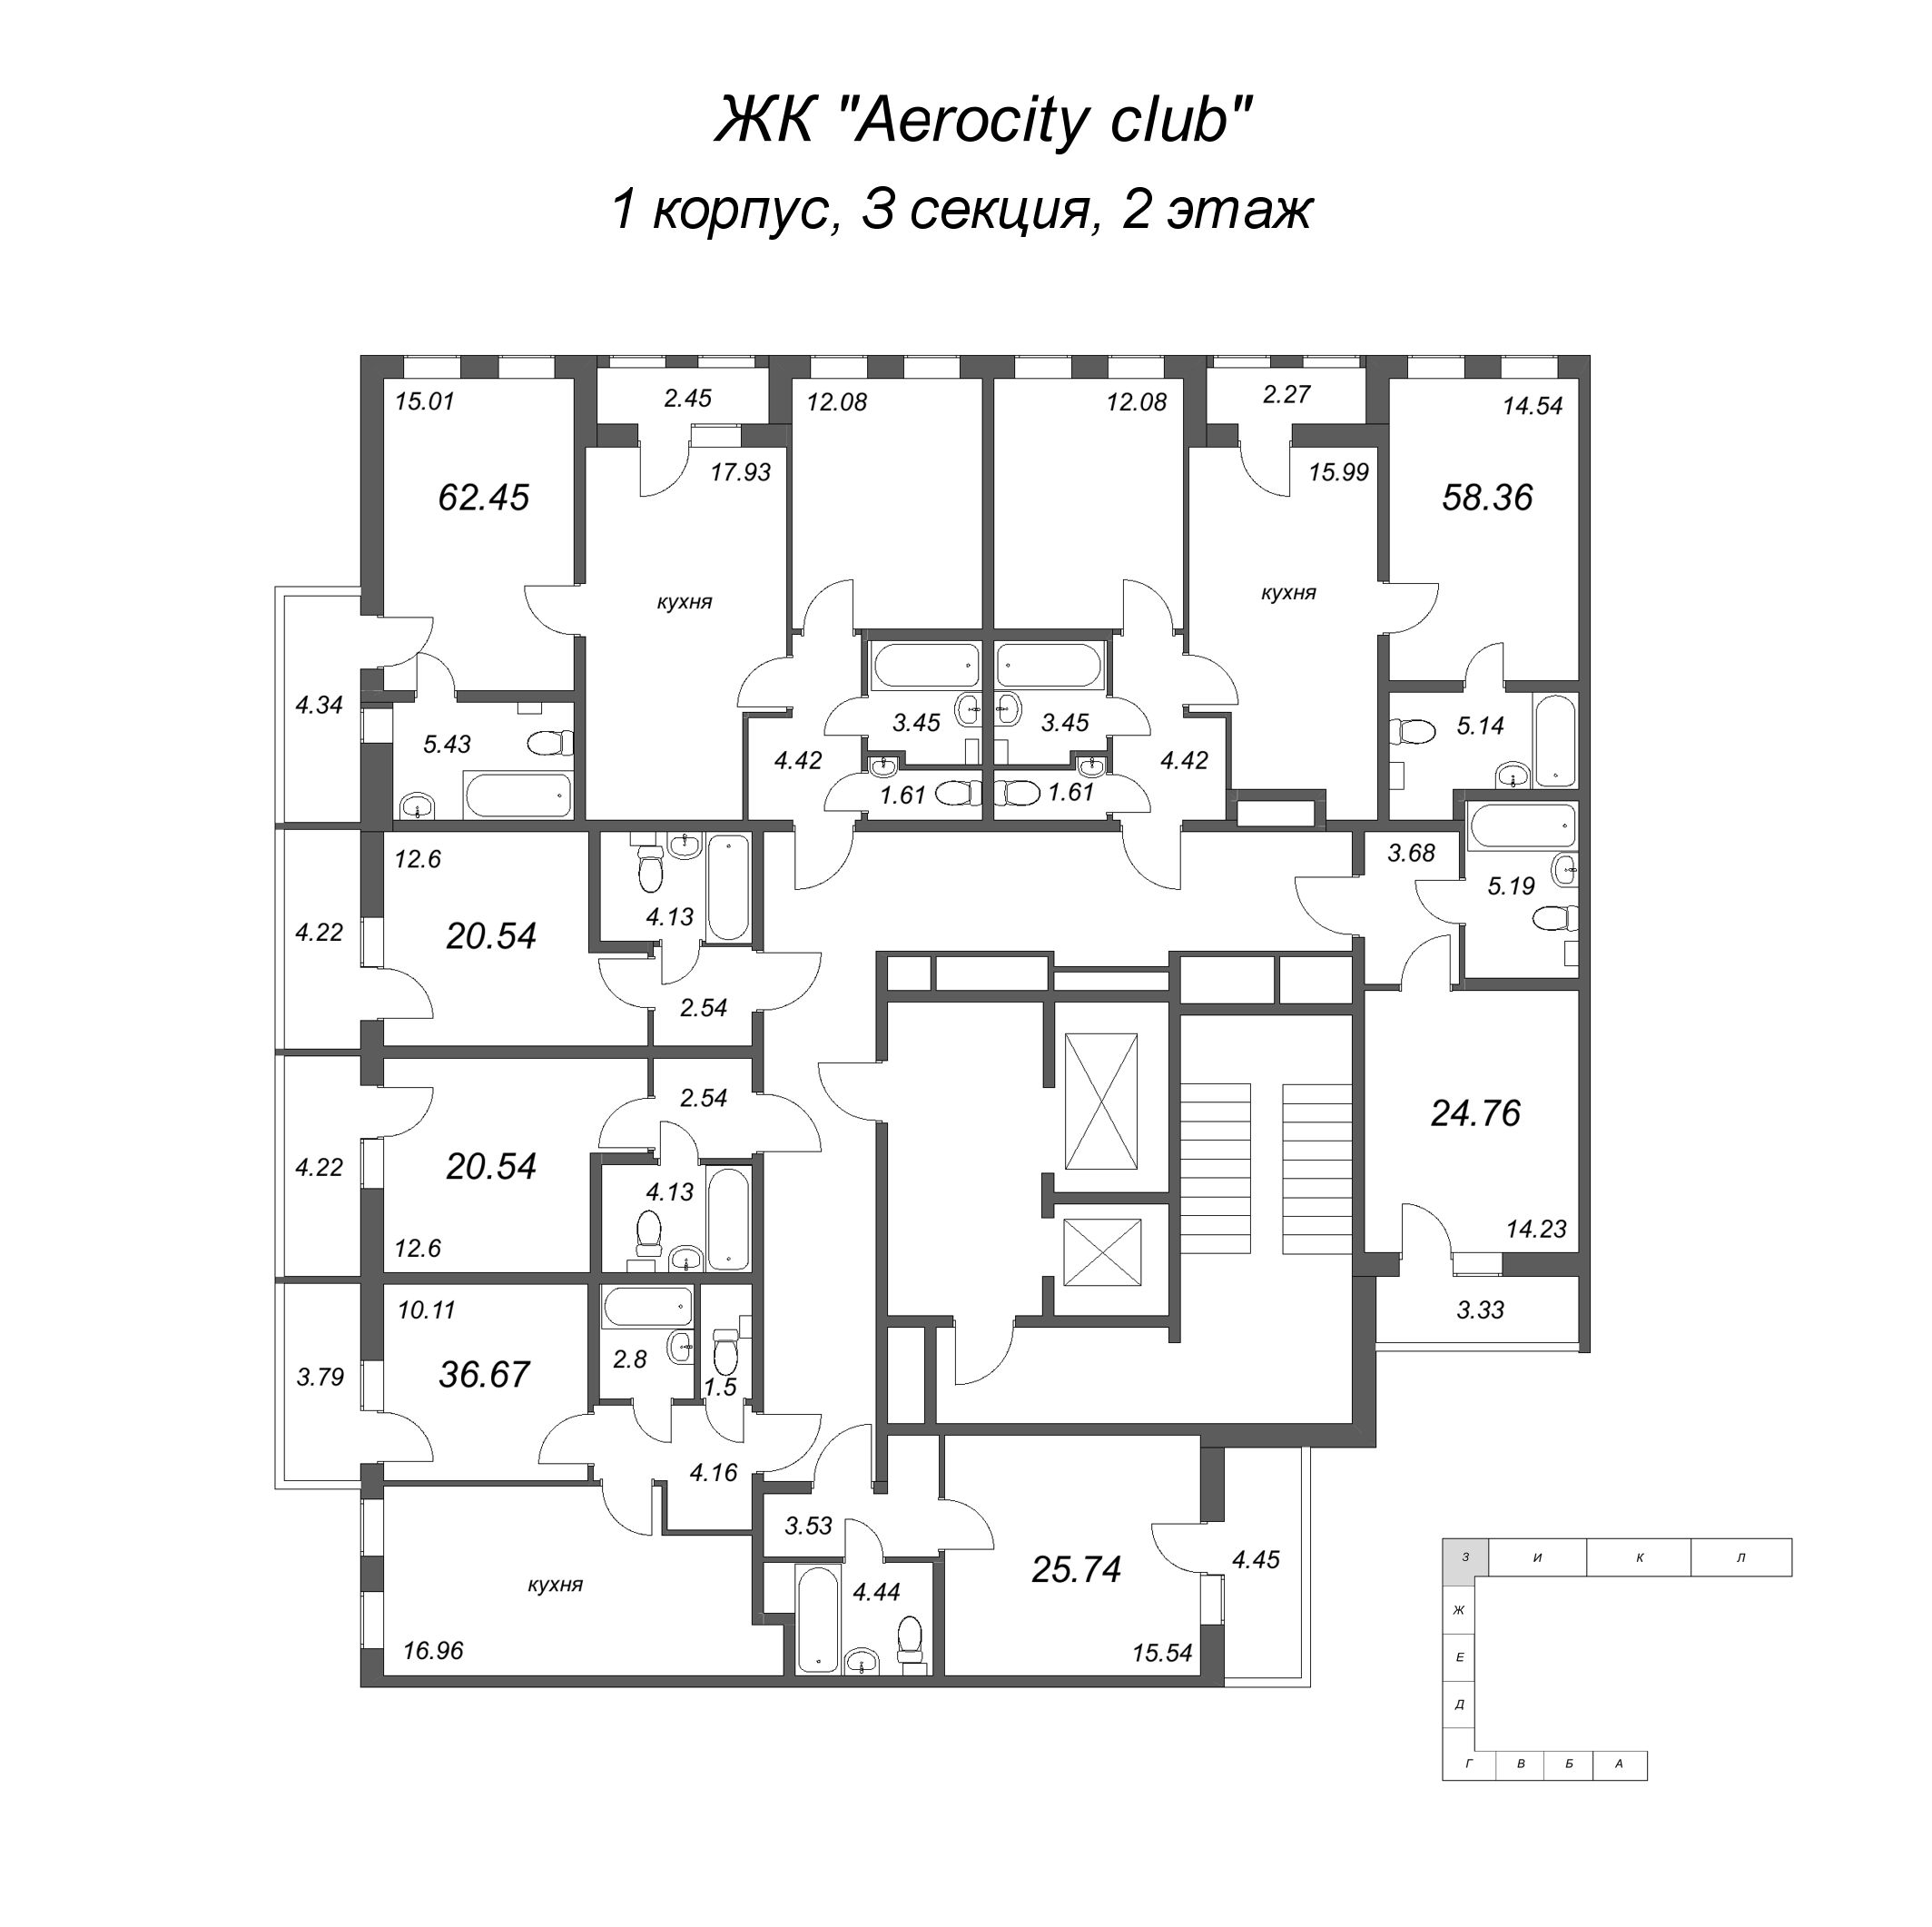 3-комнатная (Евро) квартира, 62.45 м² - планировка этажа